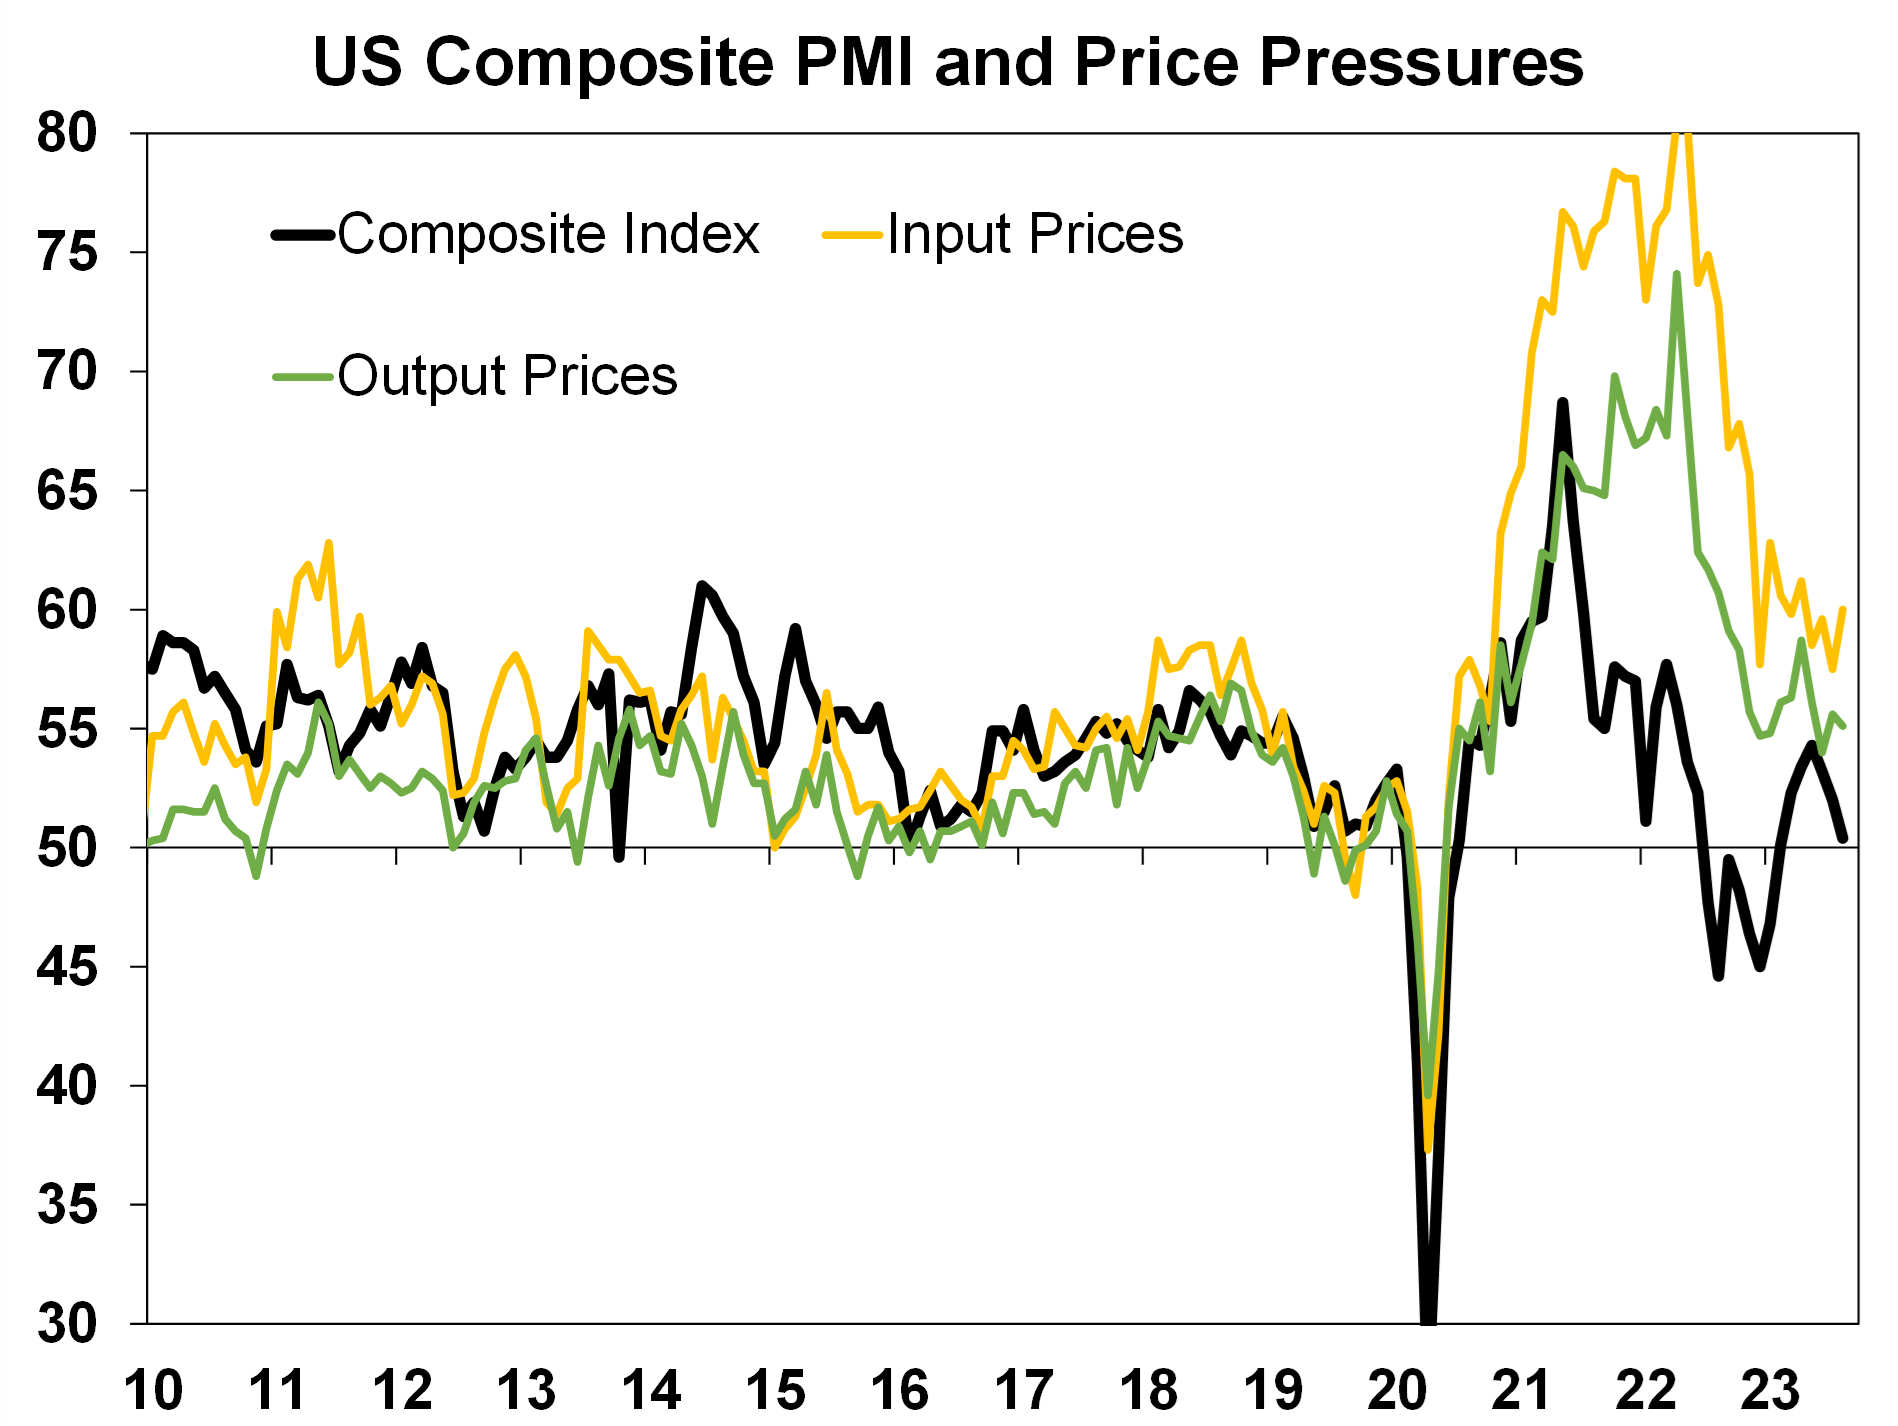 US composite PMI and Price Pressures
